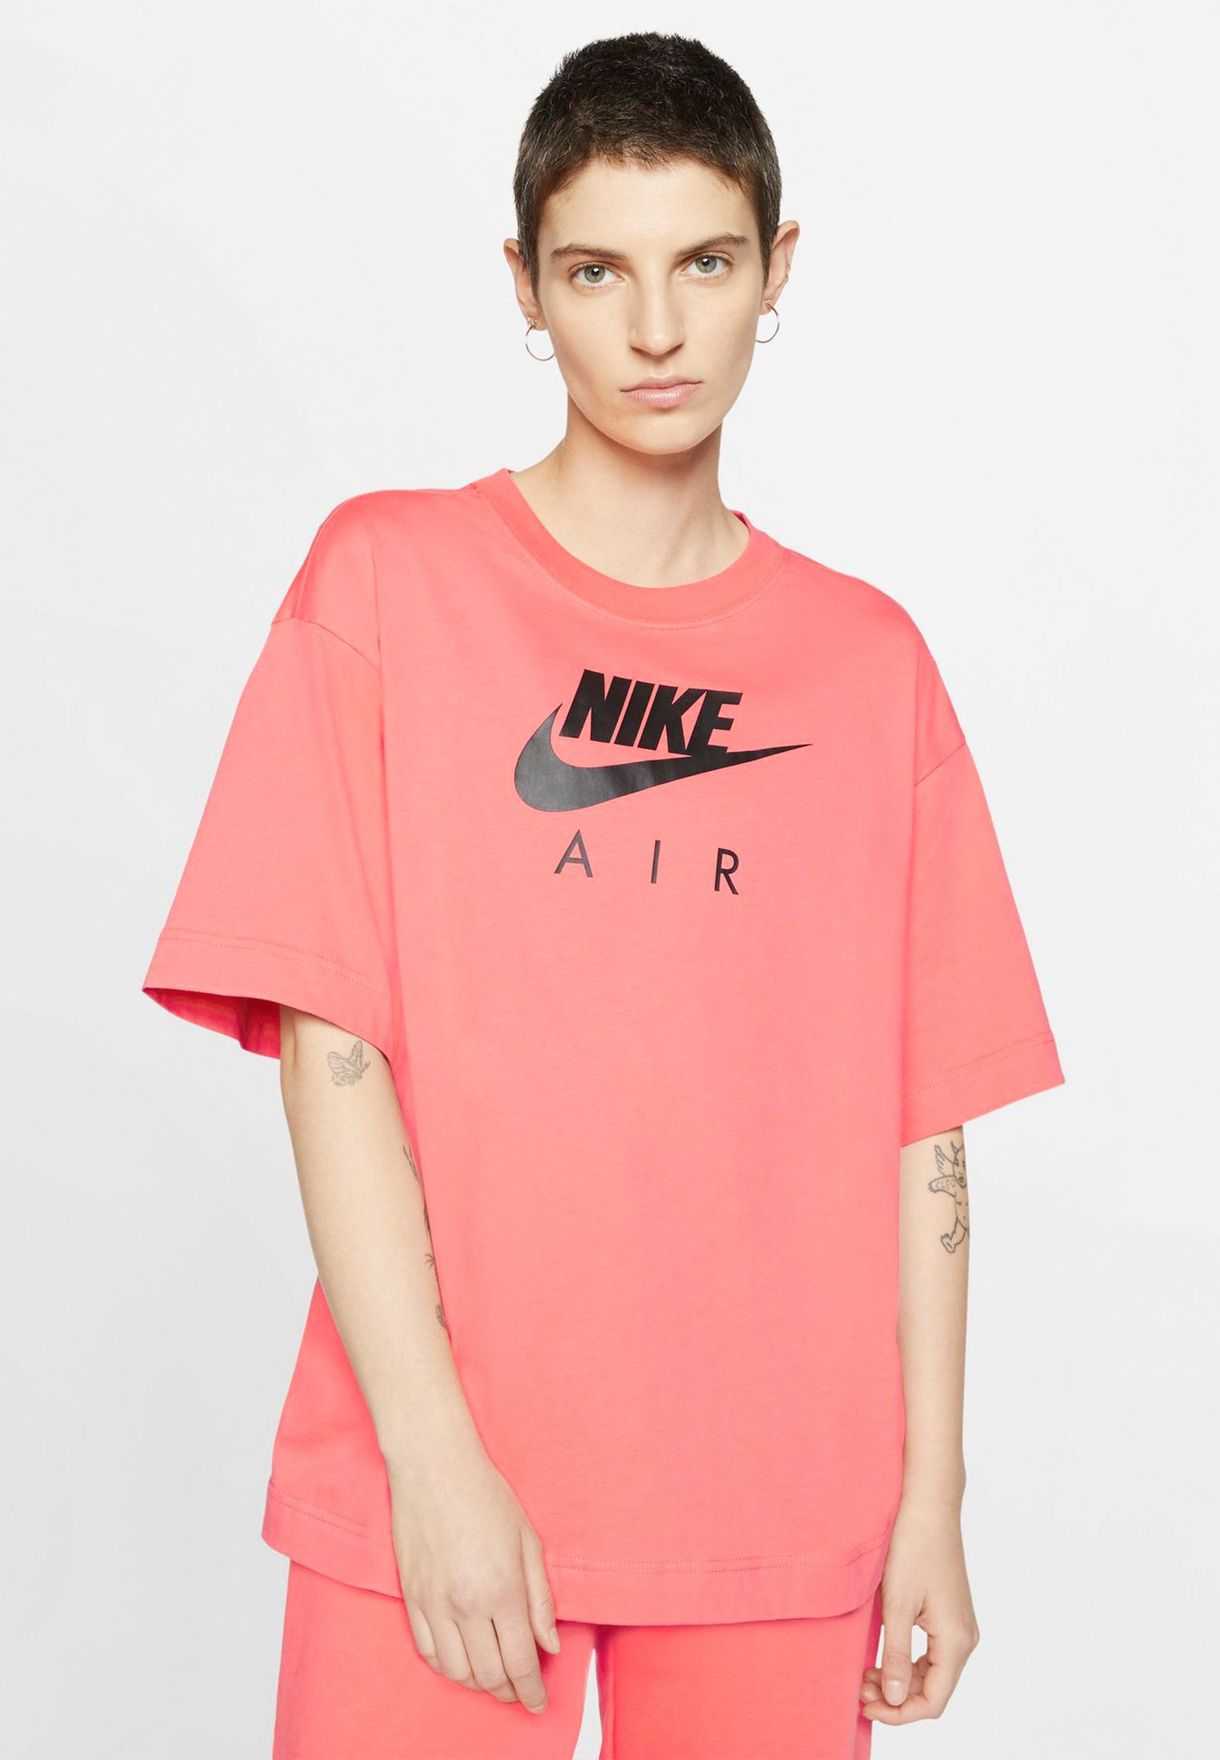 nike air t shirt pink